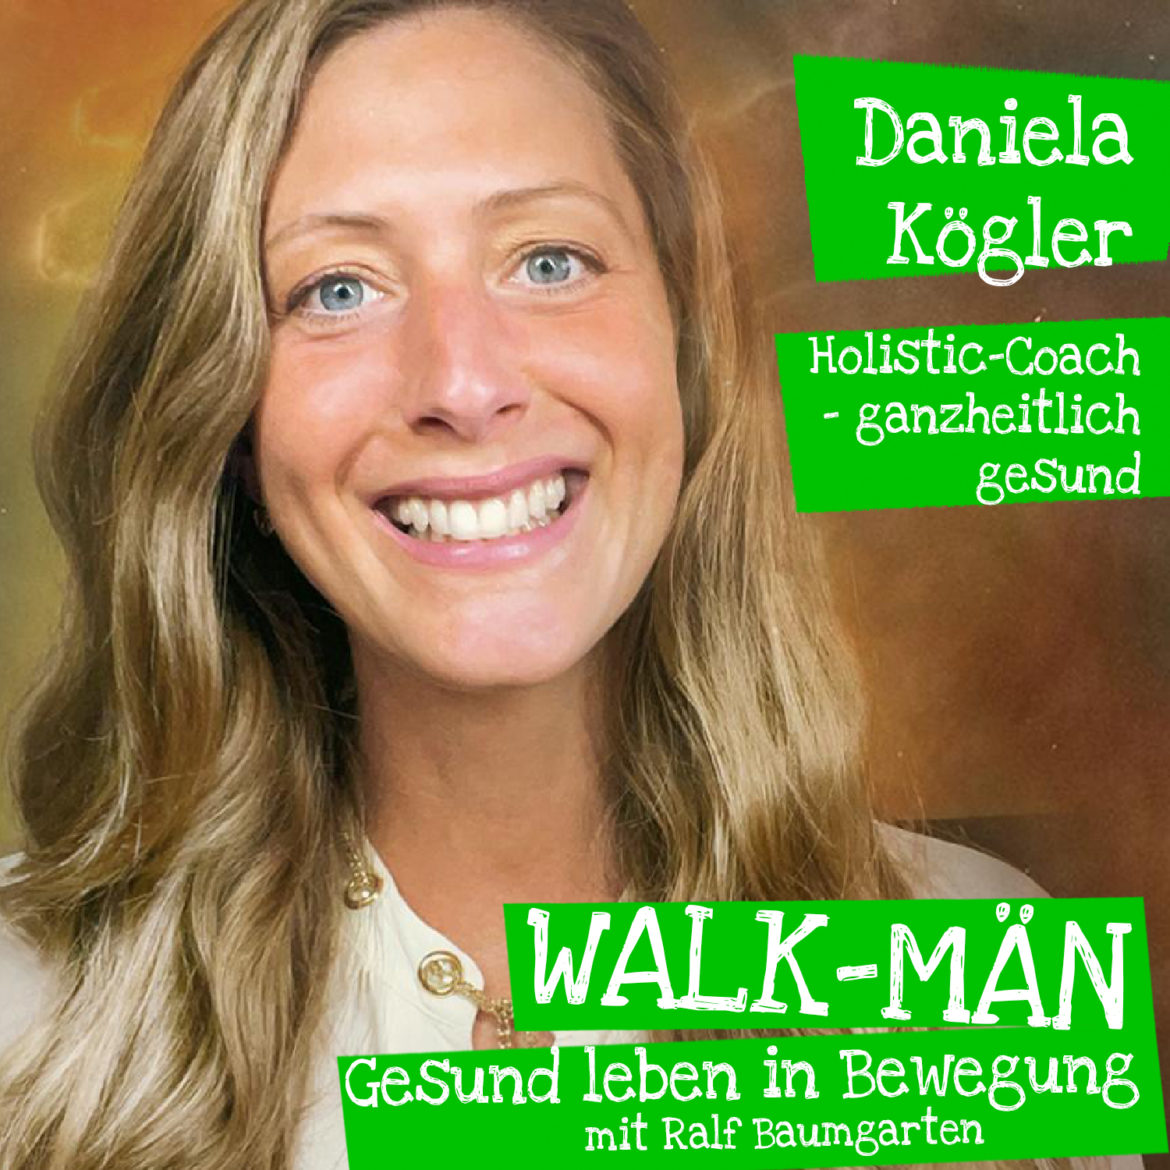 Episode 89 des Walk-Män-Podcasts: Daniela Kögler folgt dem Ruf ihrer Seele